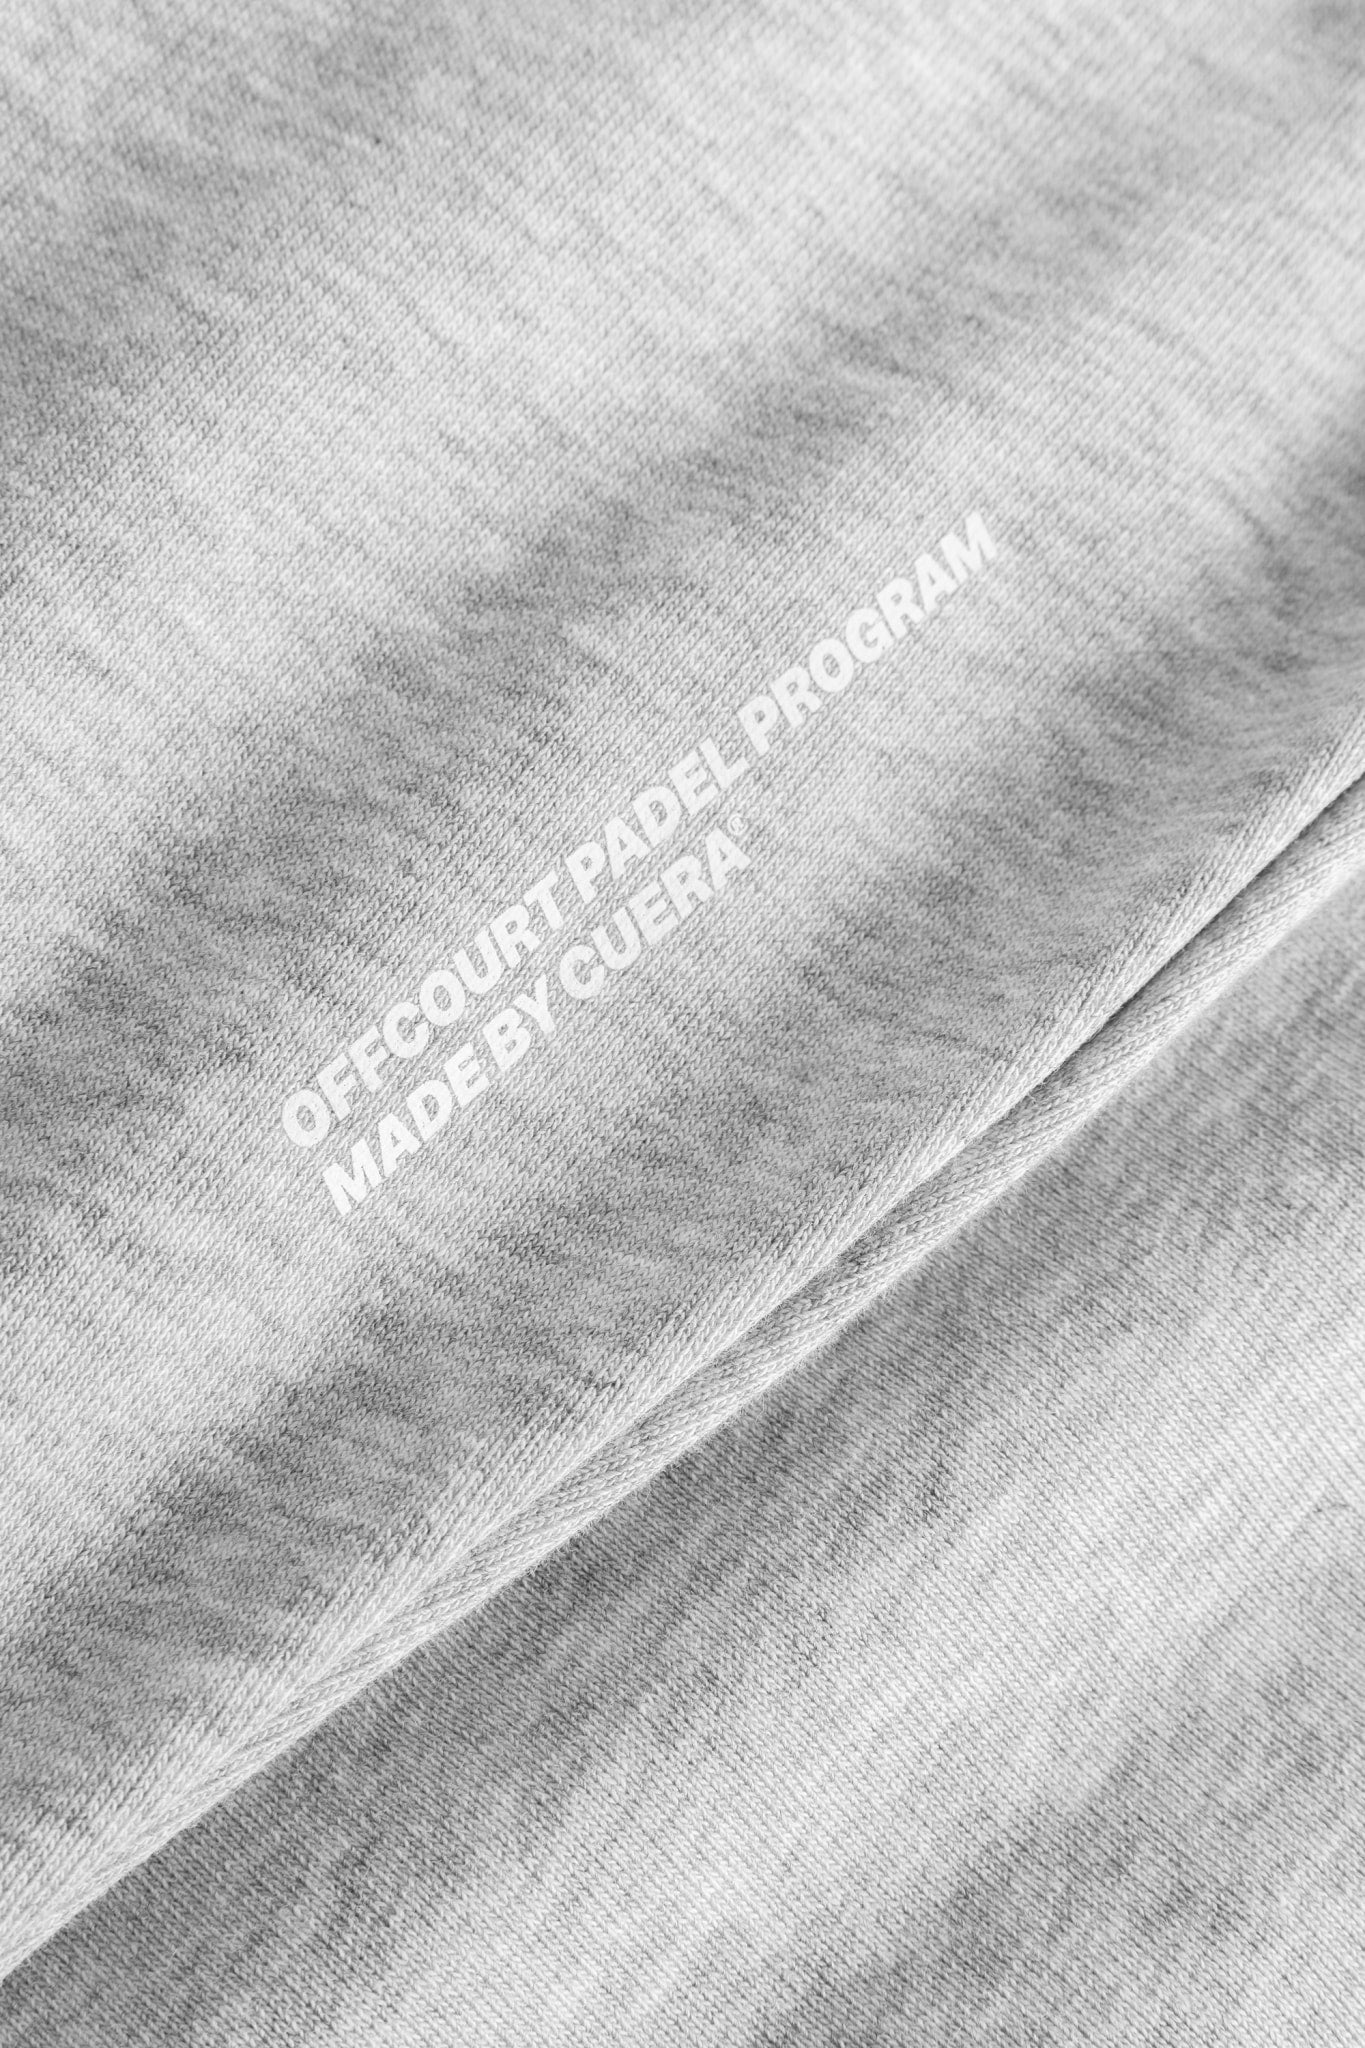 Cropped Merch Hoodie - Grey